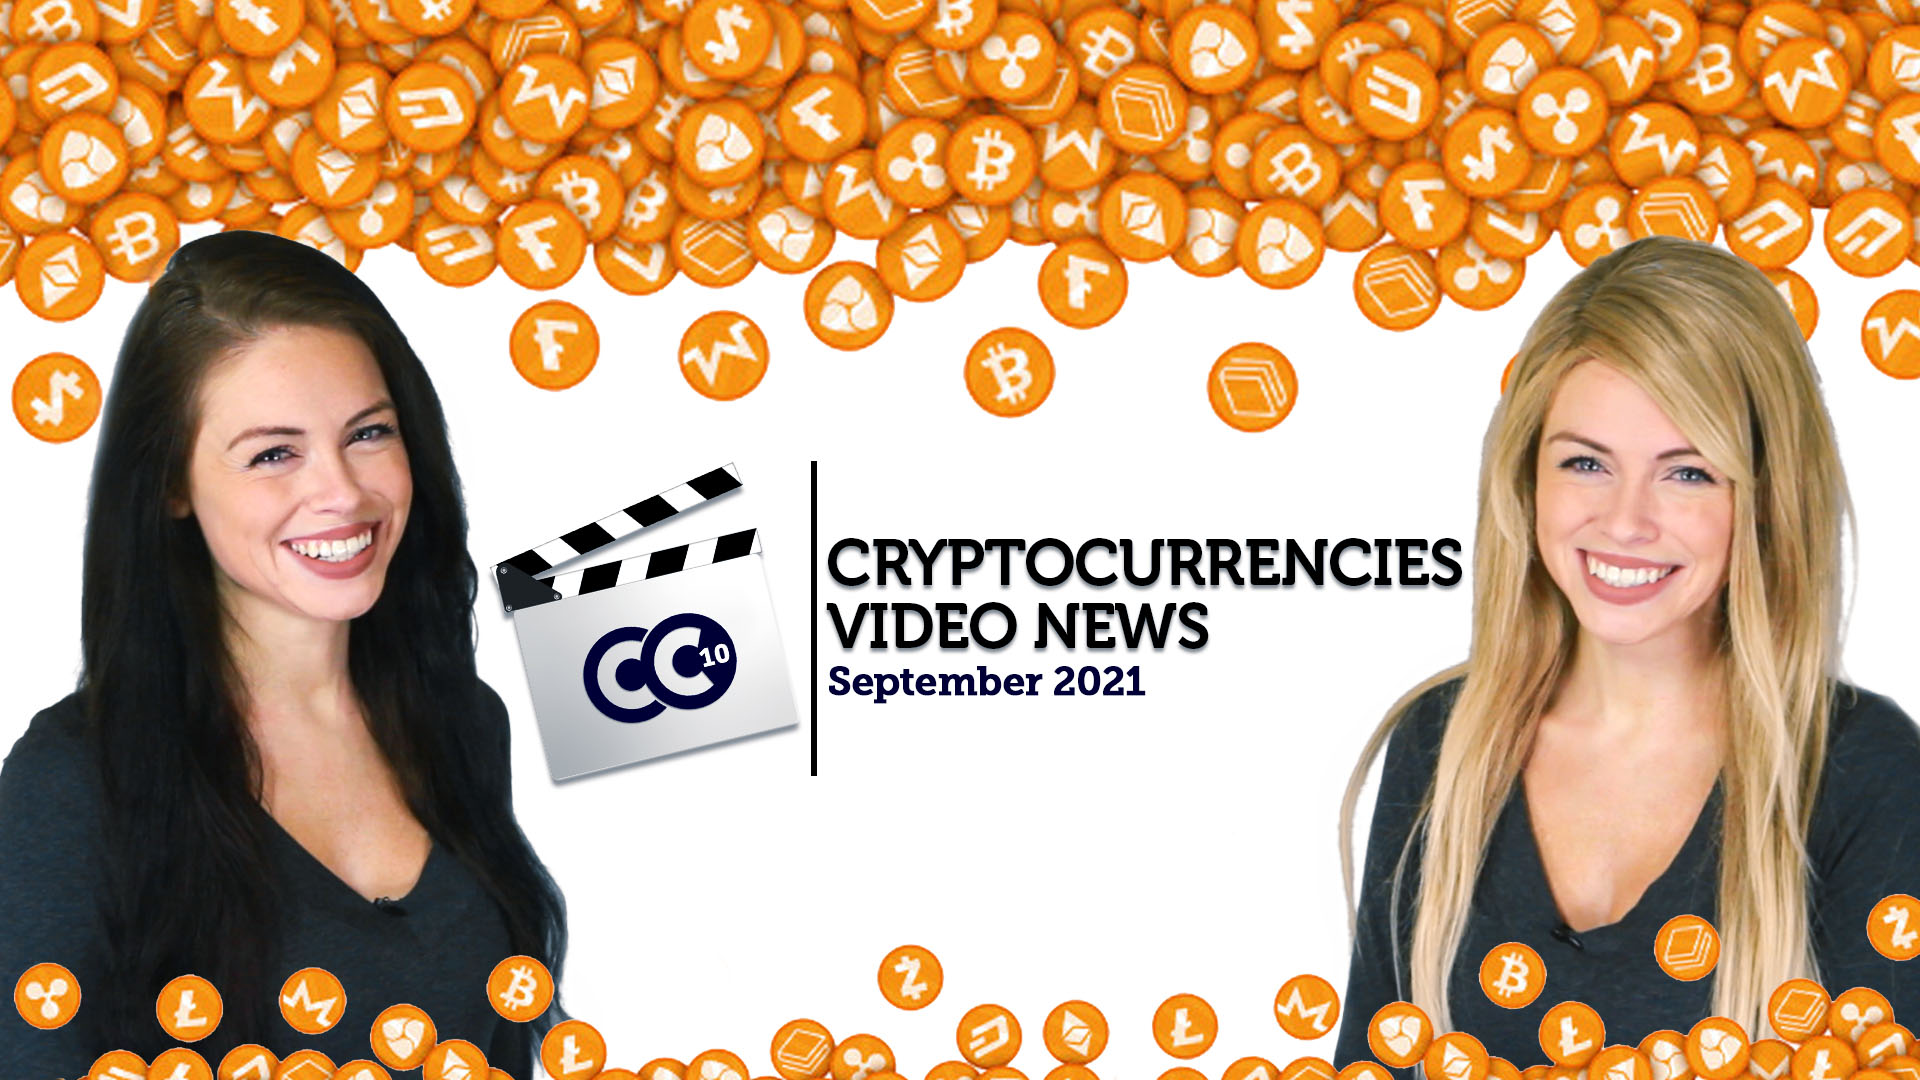 Cryptocurrencies Video News